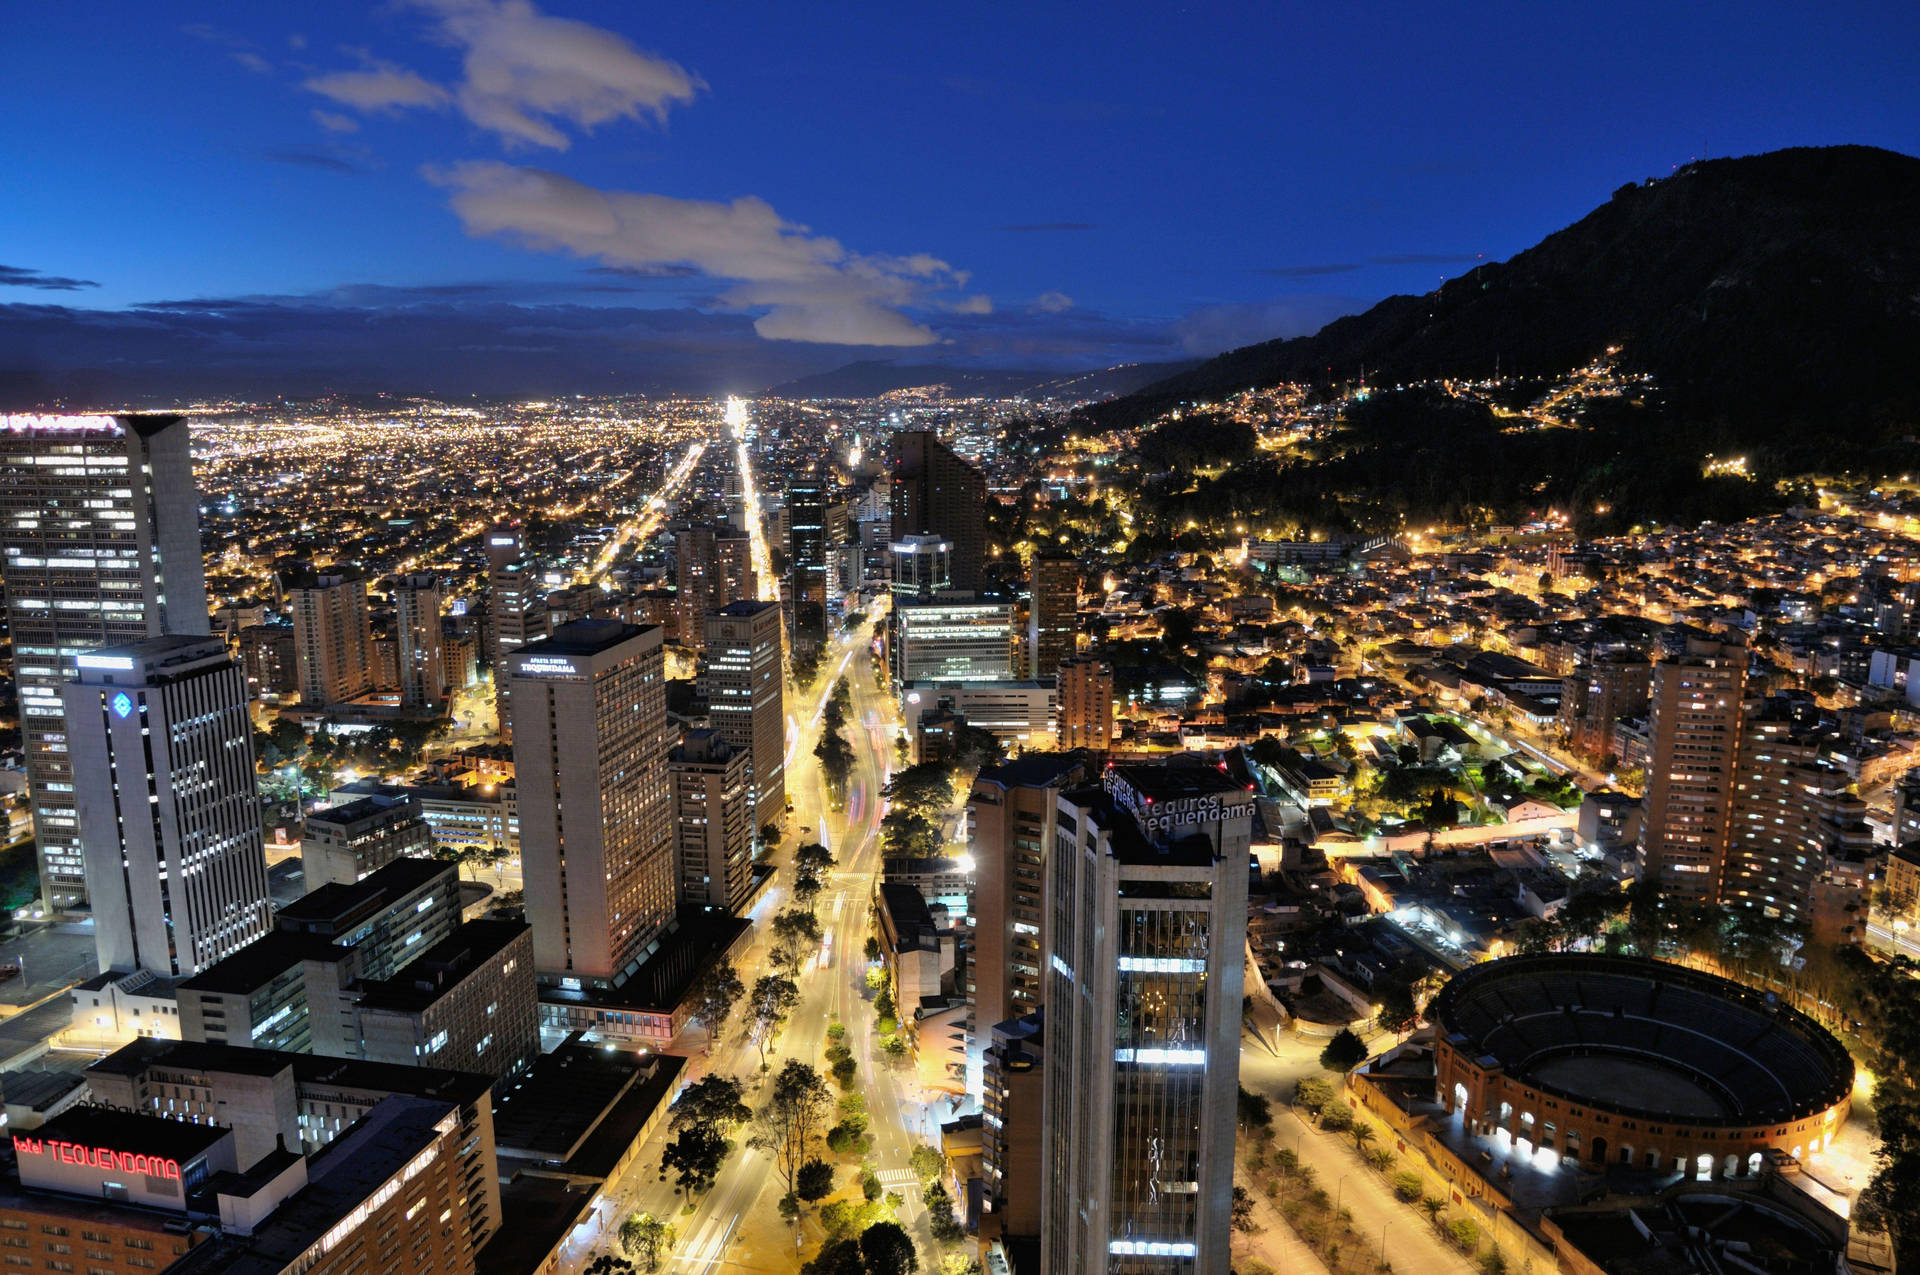 Illuminated Roads Of Bogota At Night Background